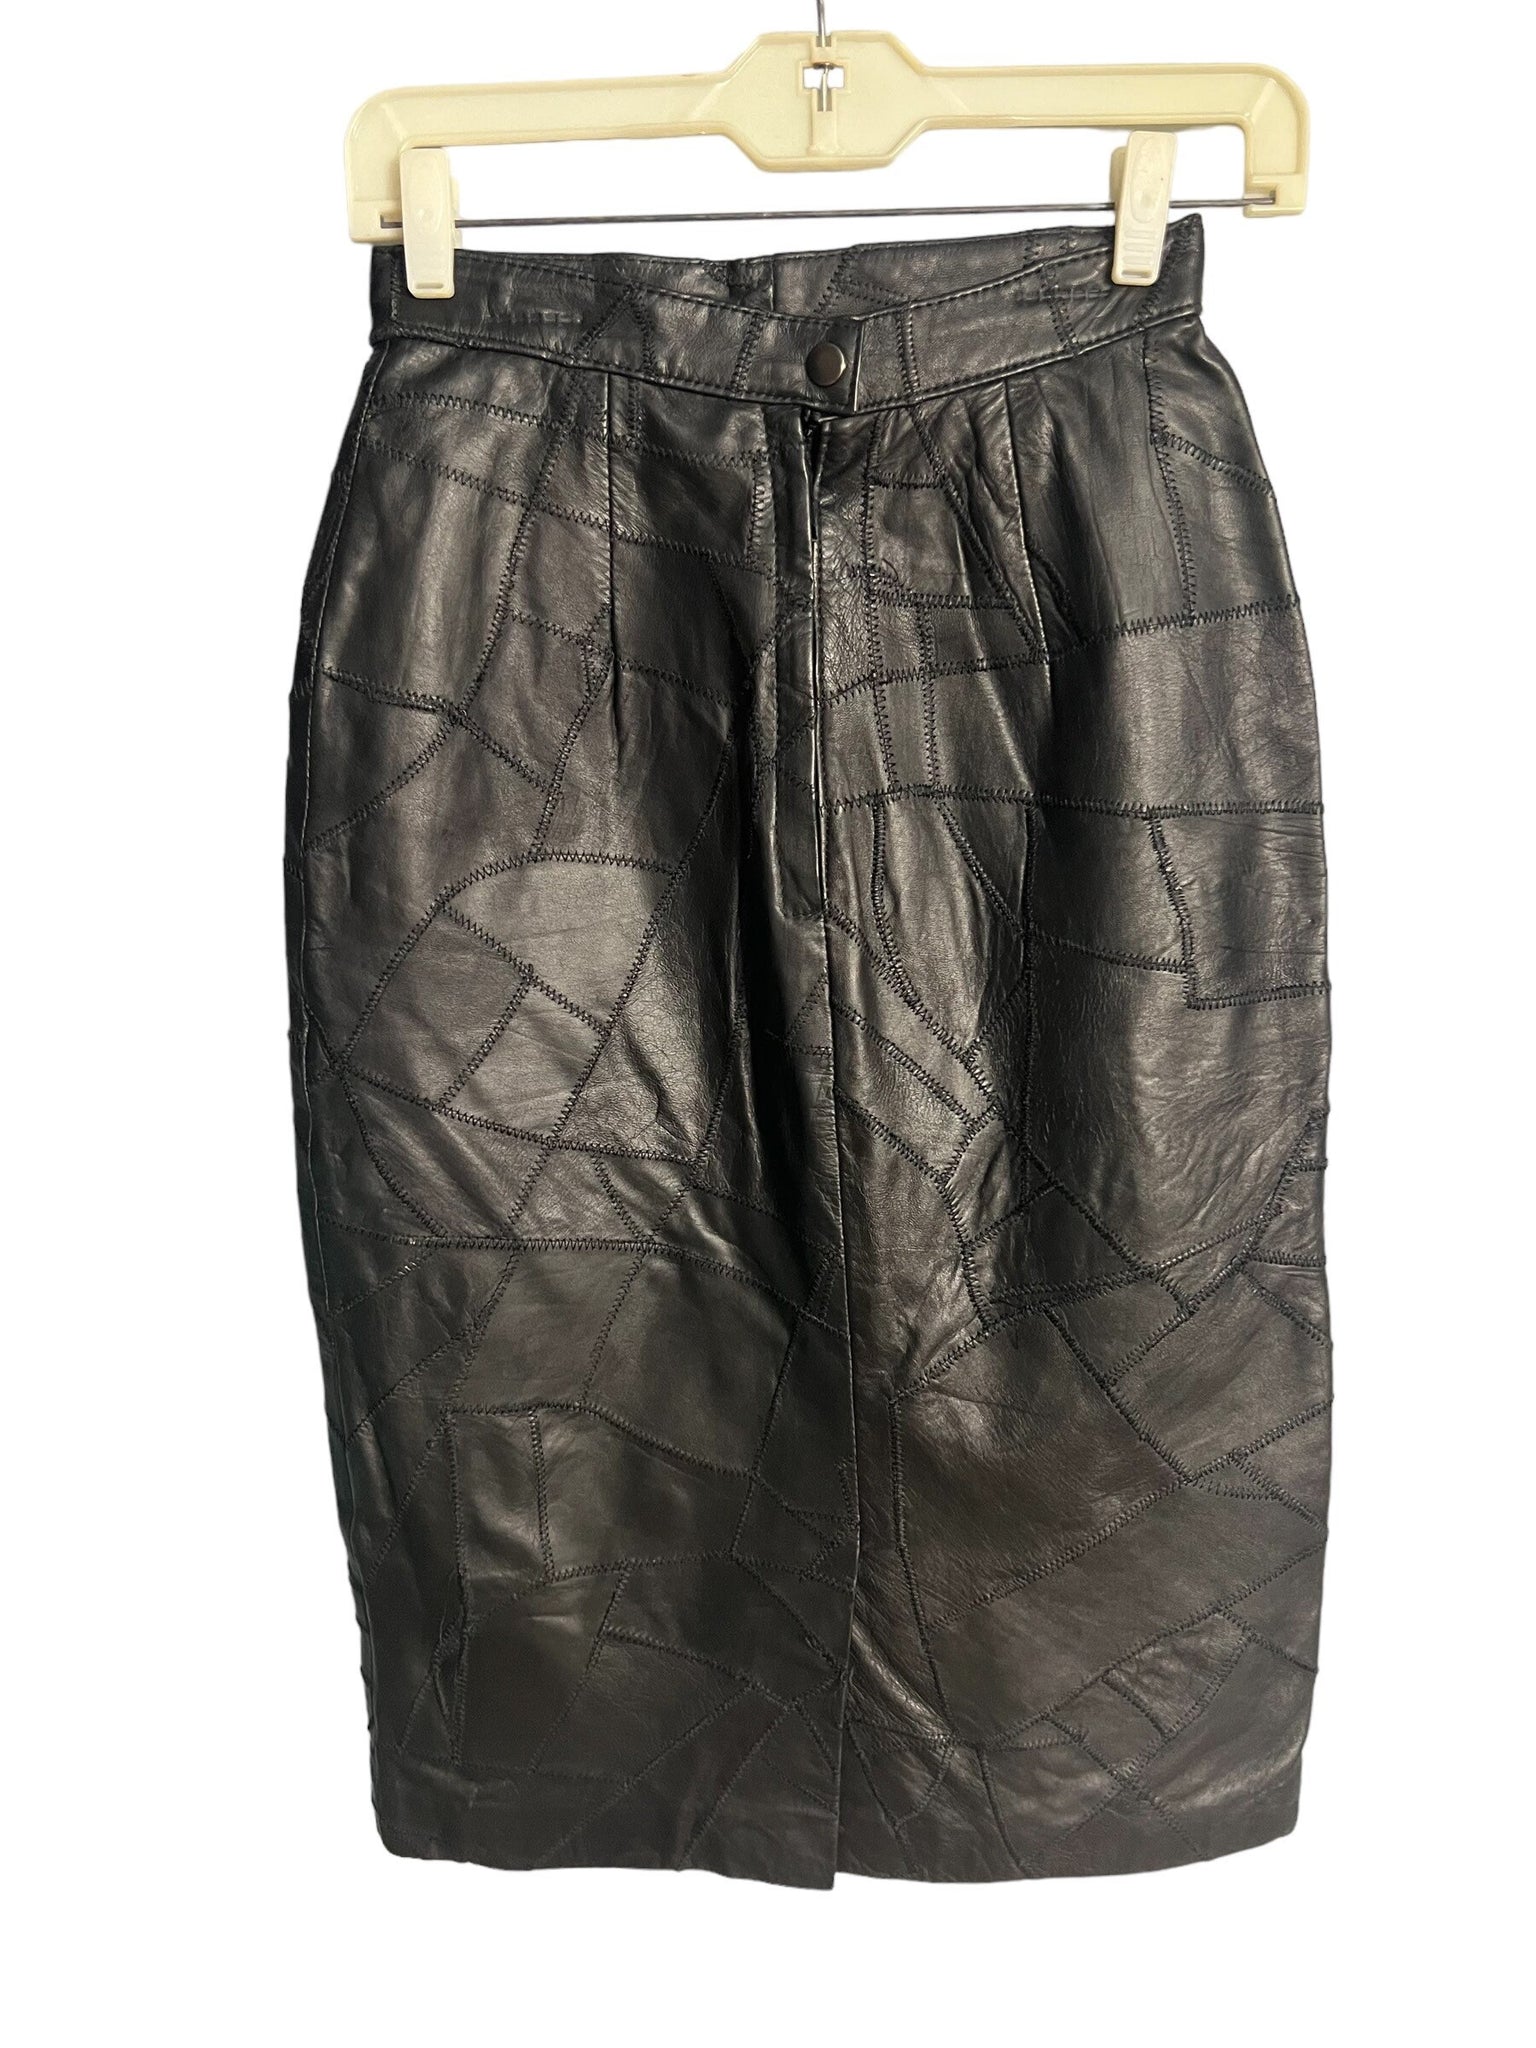 Vintage 80's black patchwork skirt 5/6 Alamos